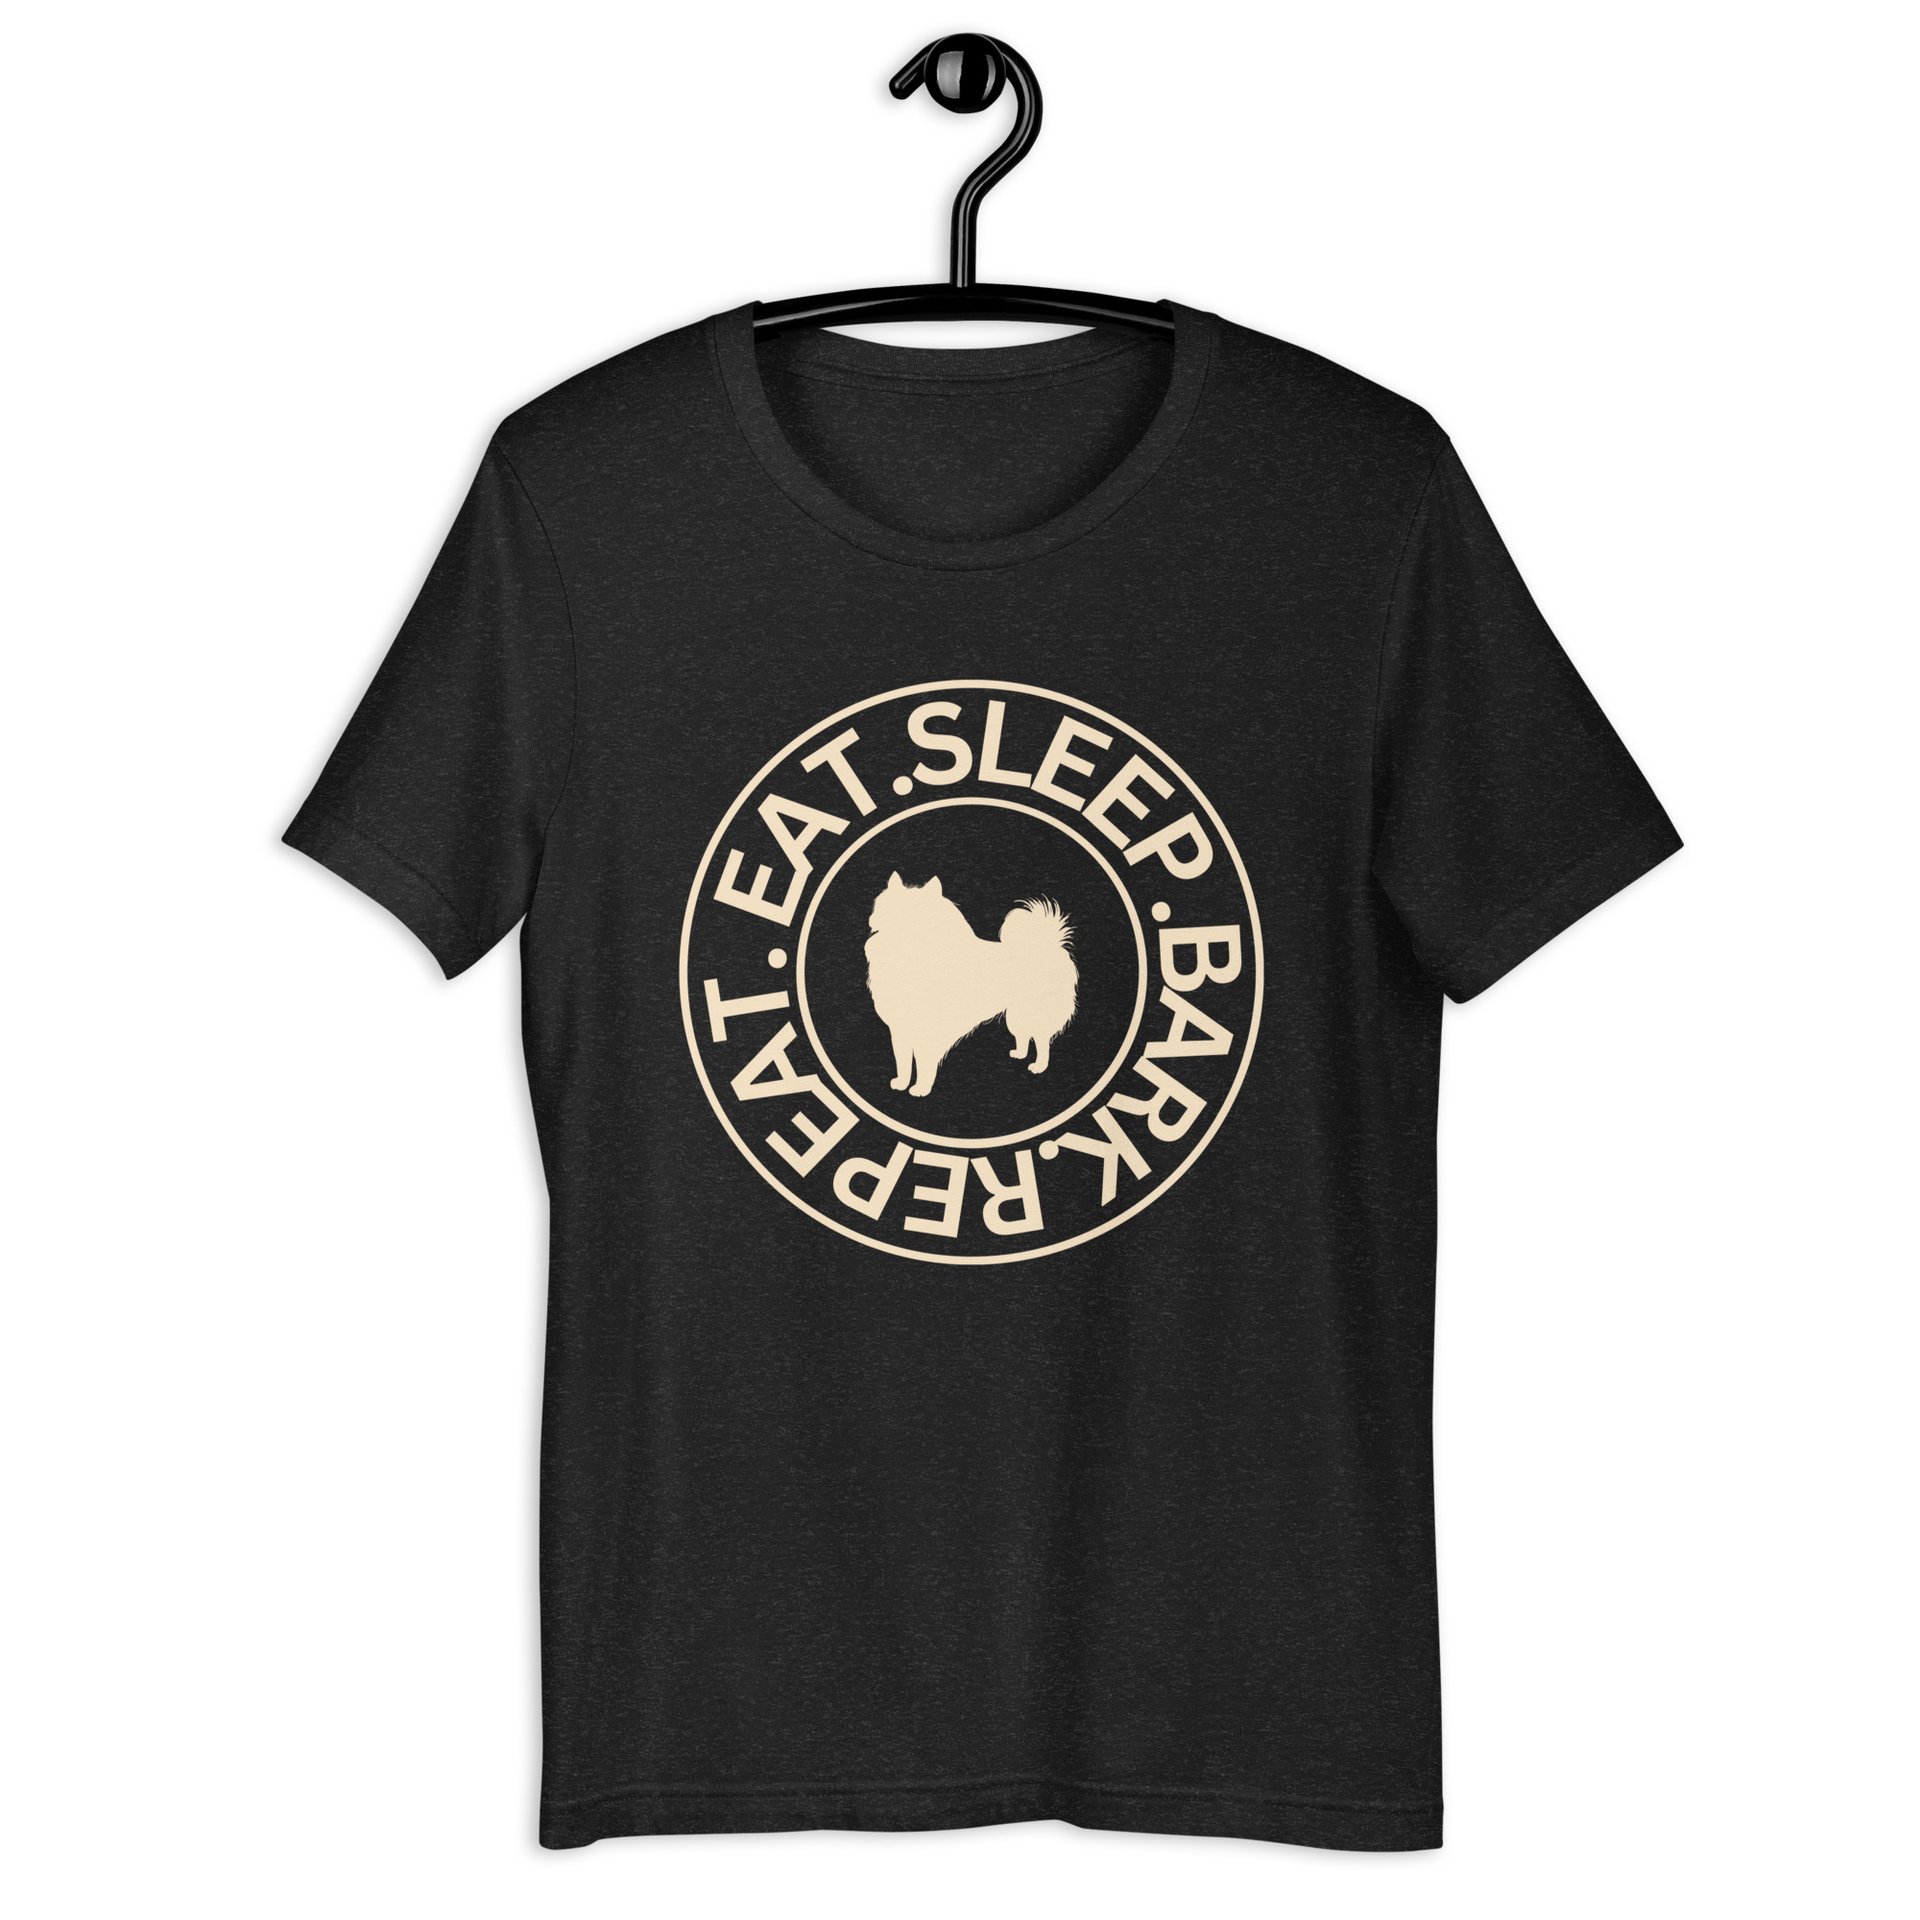 Eat Sleep Bark Repeat Poodle Unisex T-Shirt. Black Heather